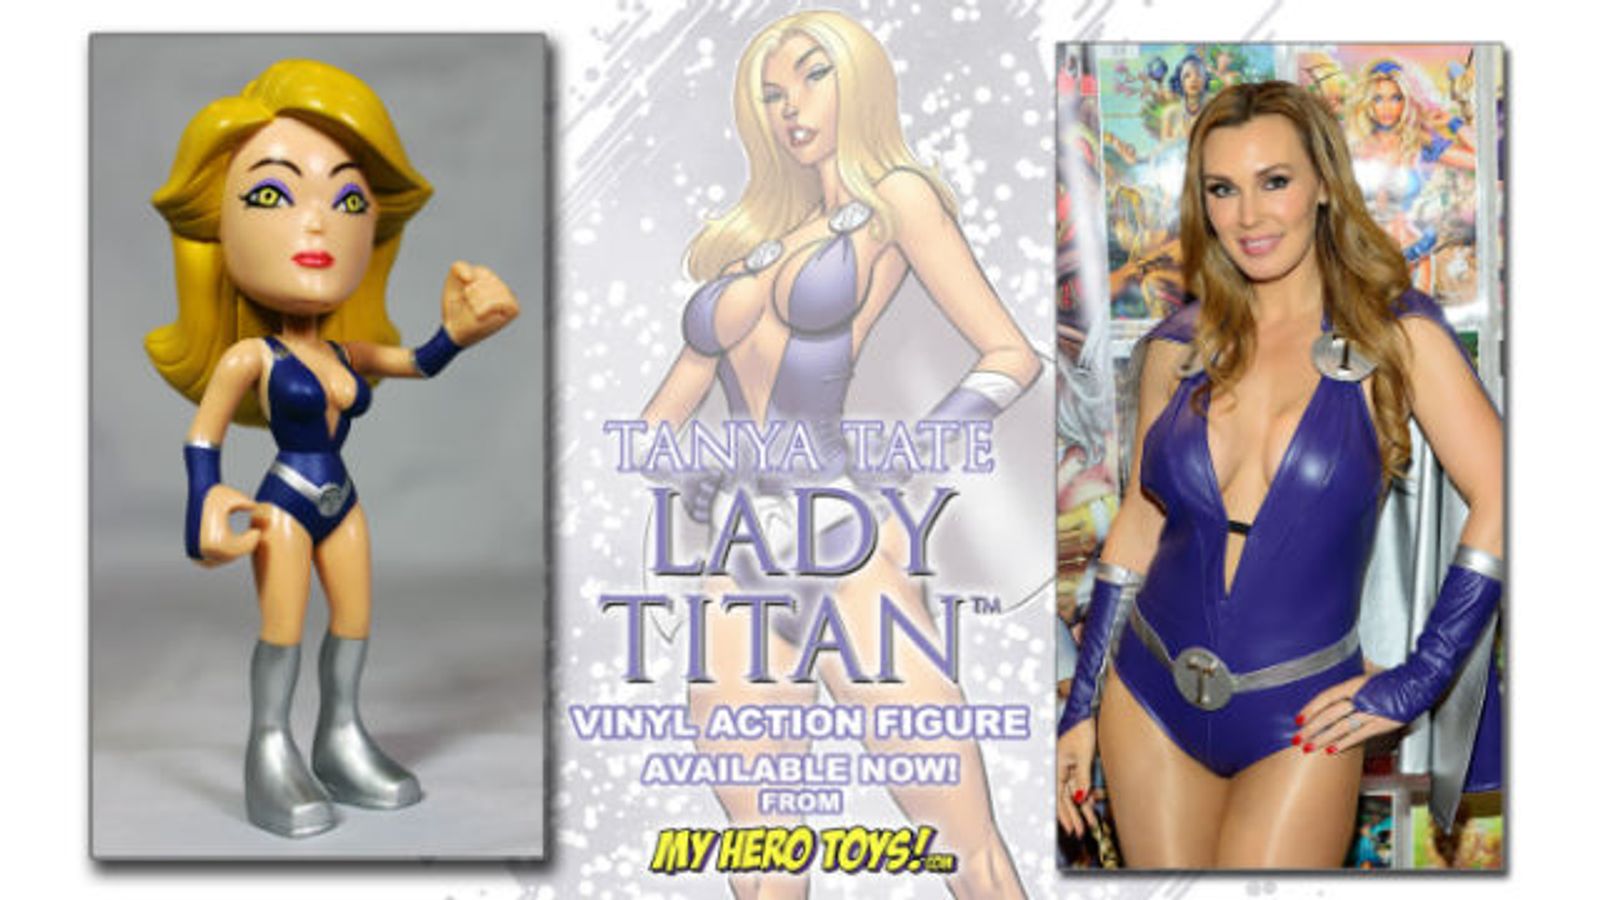 My Hero Toys Debuts Tanya Tate’s Lady Titan Vinyl Action Figure